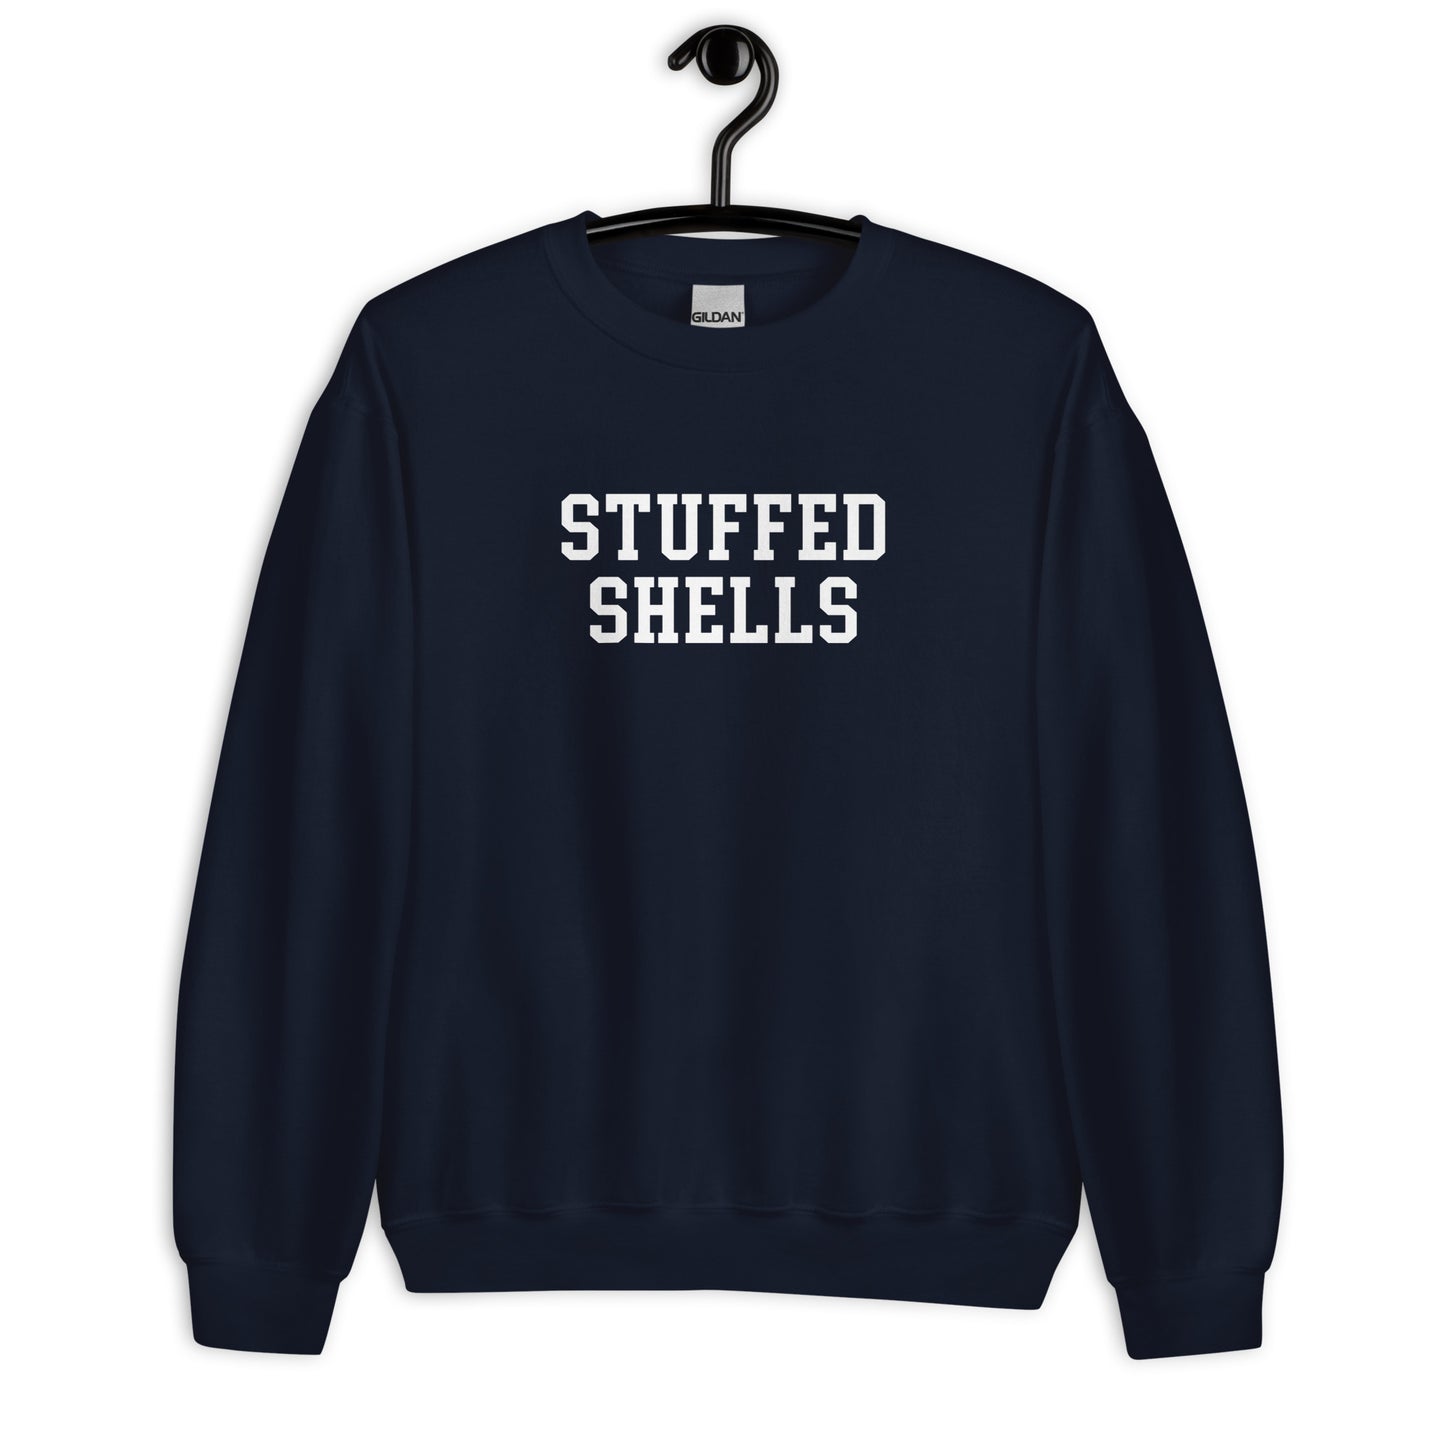 Stuffed Shells Sweatshirt - Straight Font